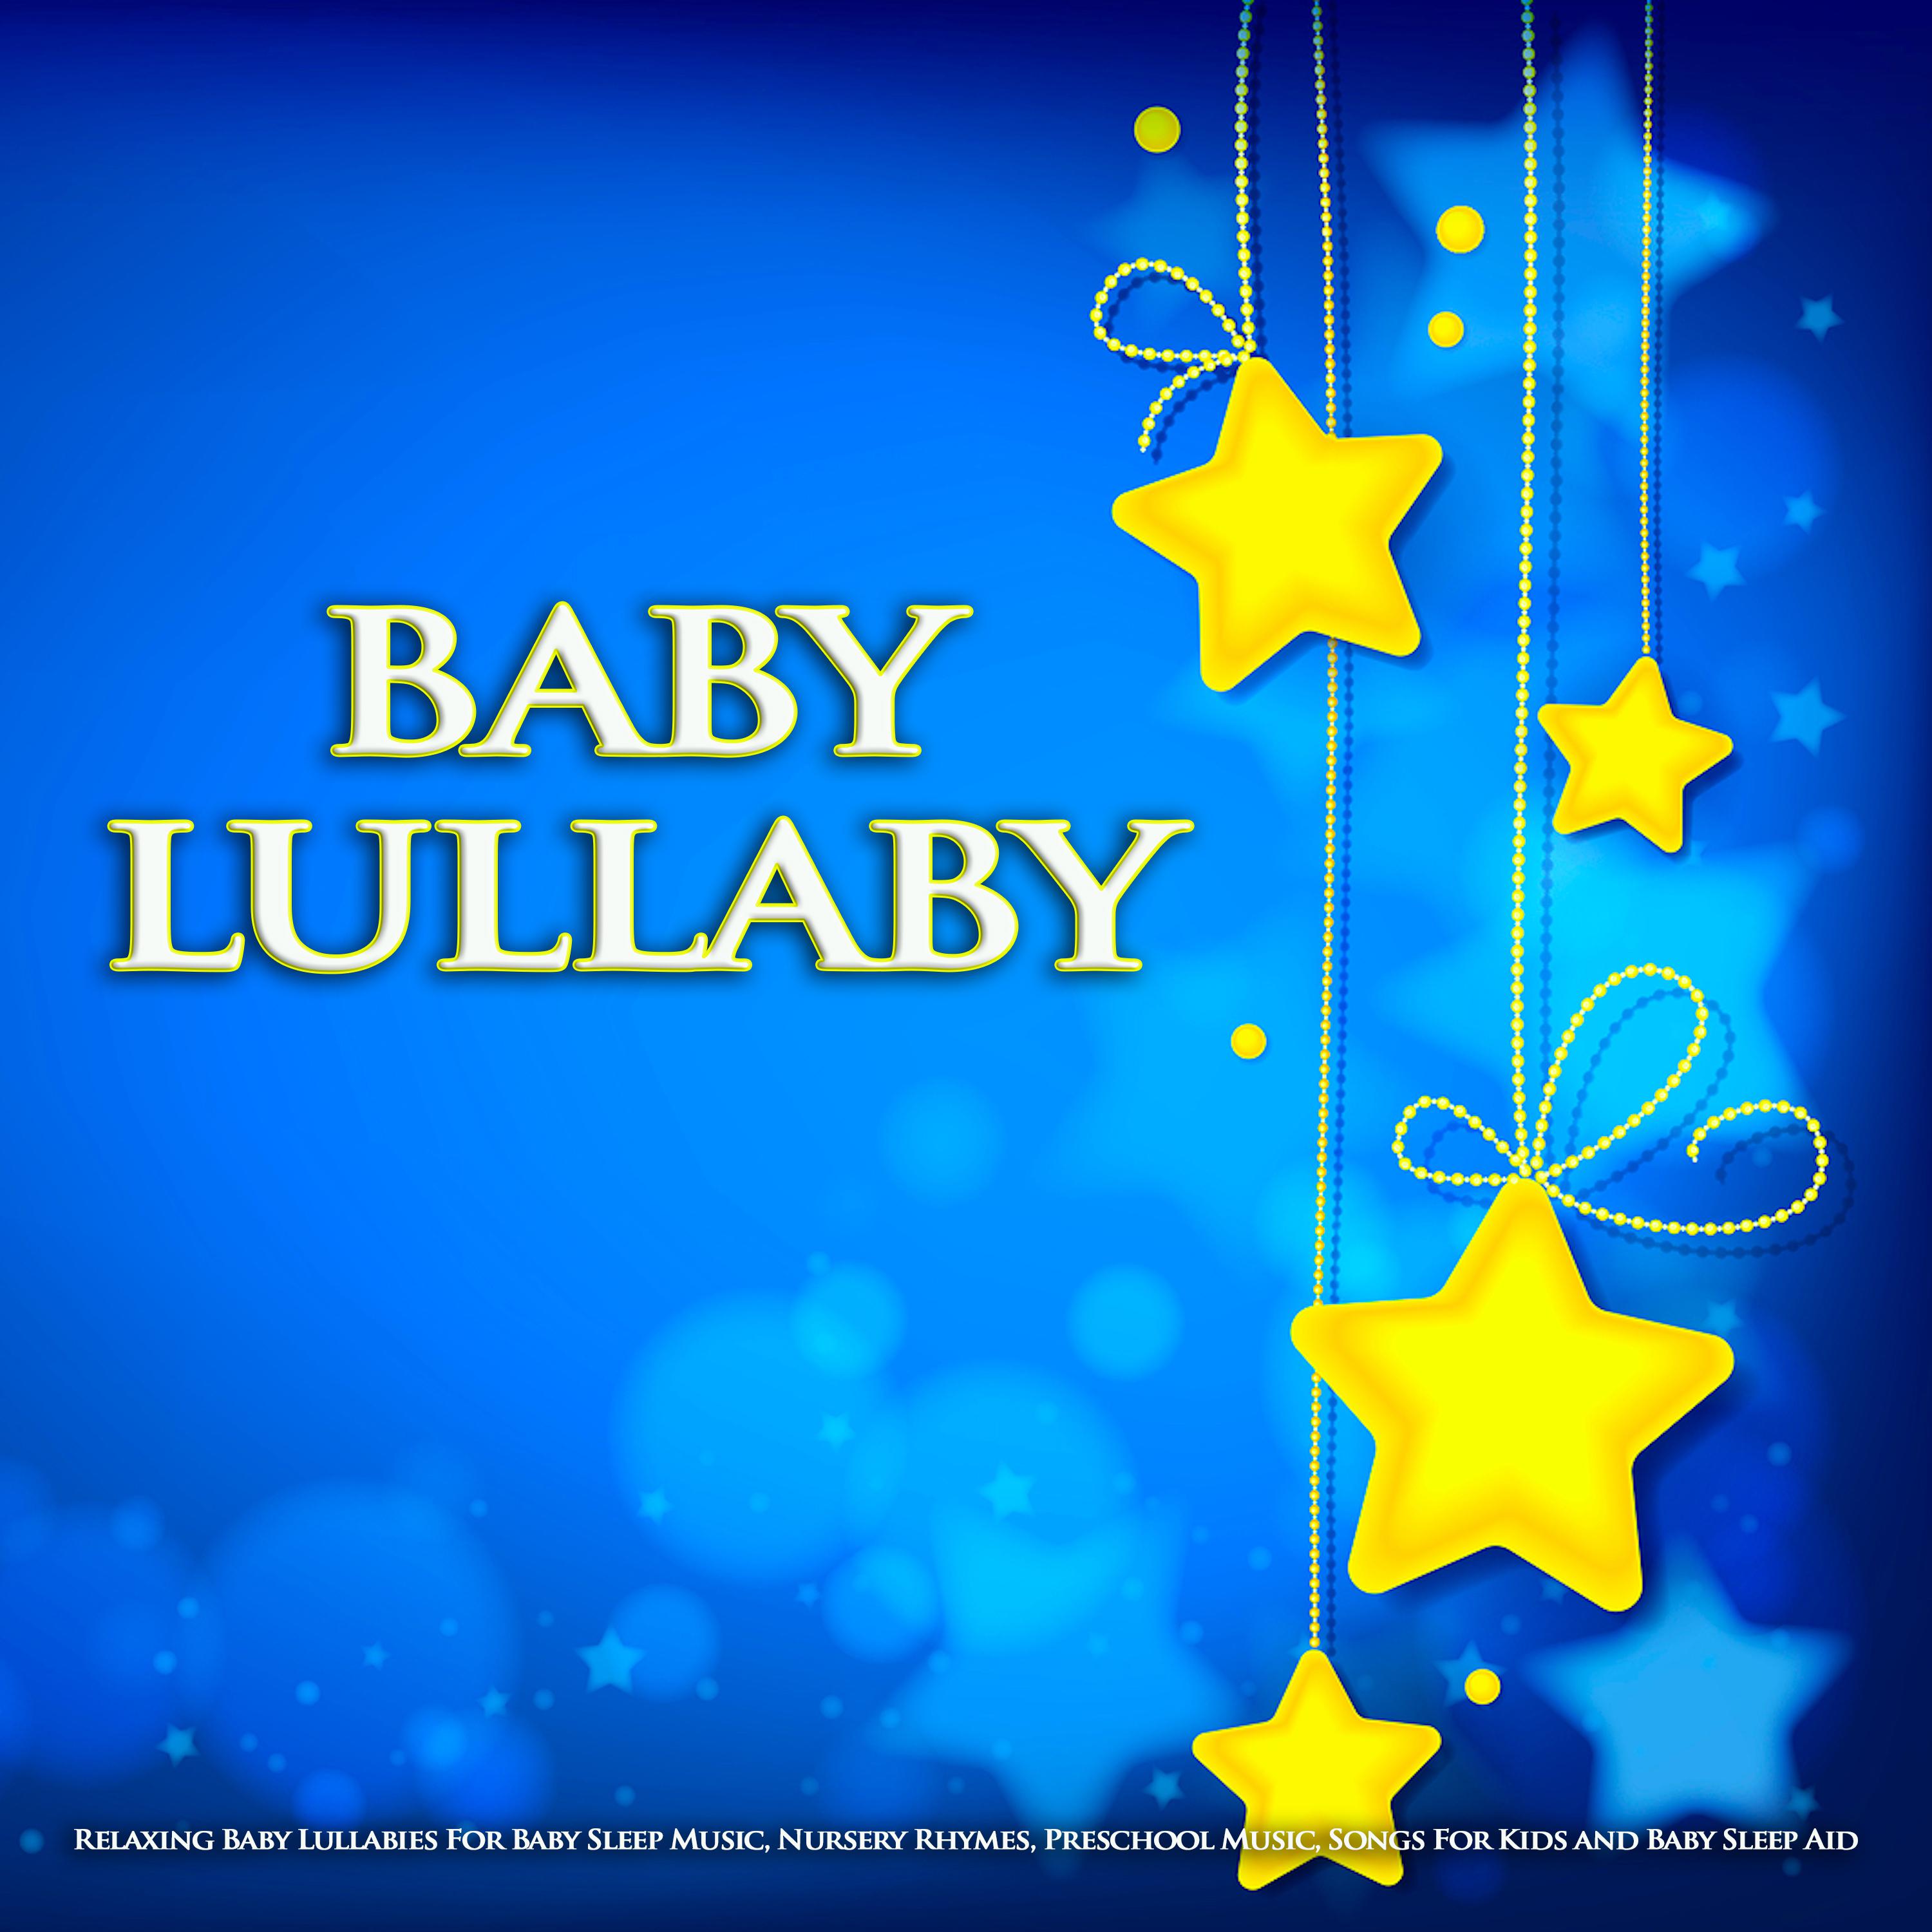 Baby Lullaby: Relaxing Baby Lullabies For Baby Sleep Music, Nursery Rhymes, Preschool Music, Songs For Kids and Baby Sleep Aid